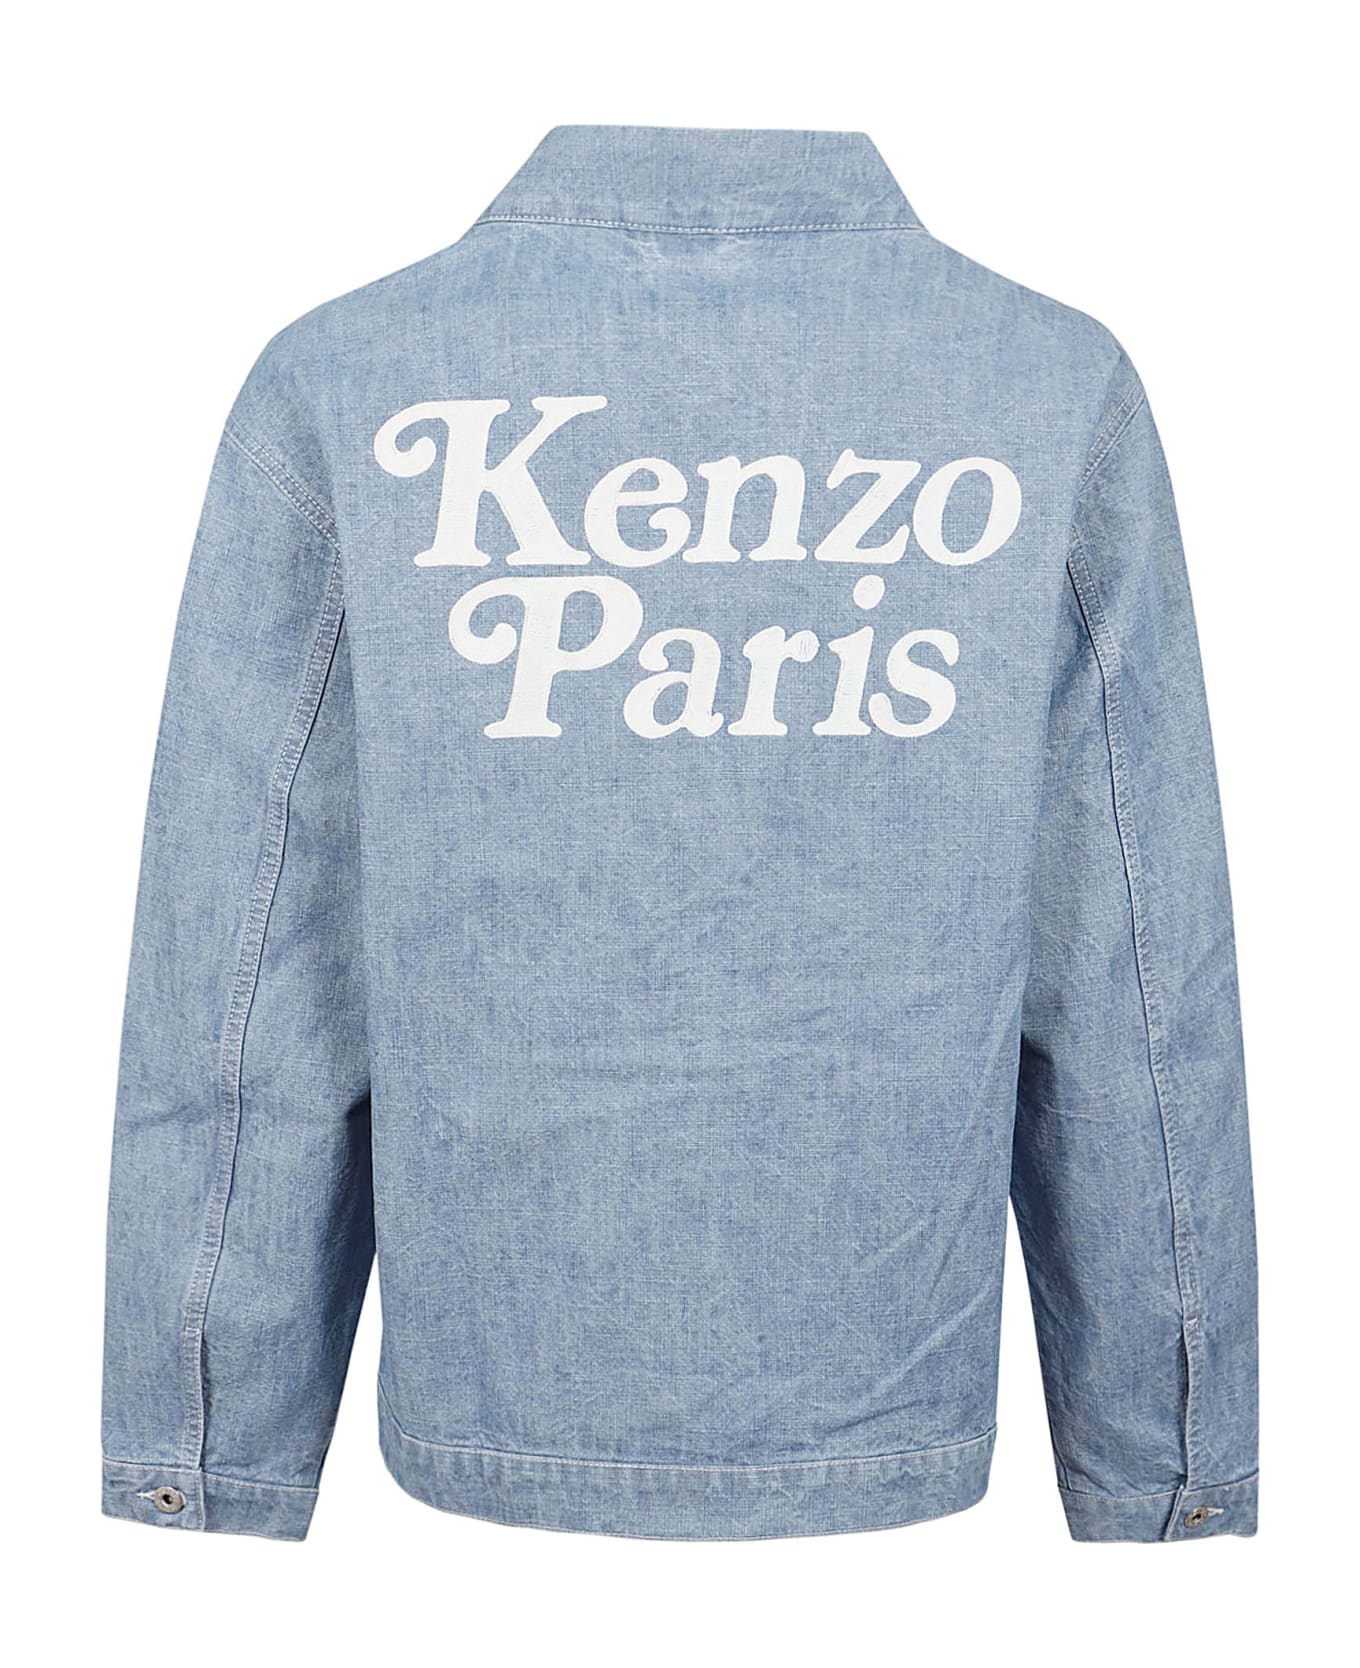 Kenzo Denim Jacket - Dt Stone Bleached Blue Denim ジャケット